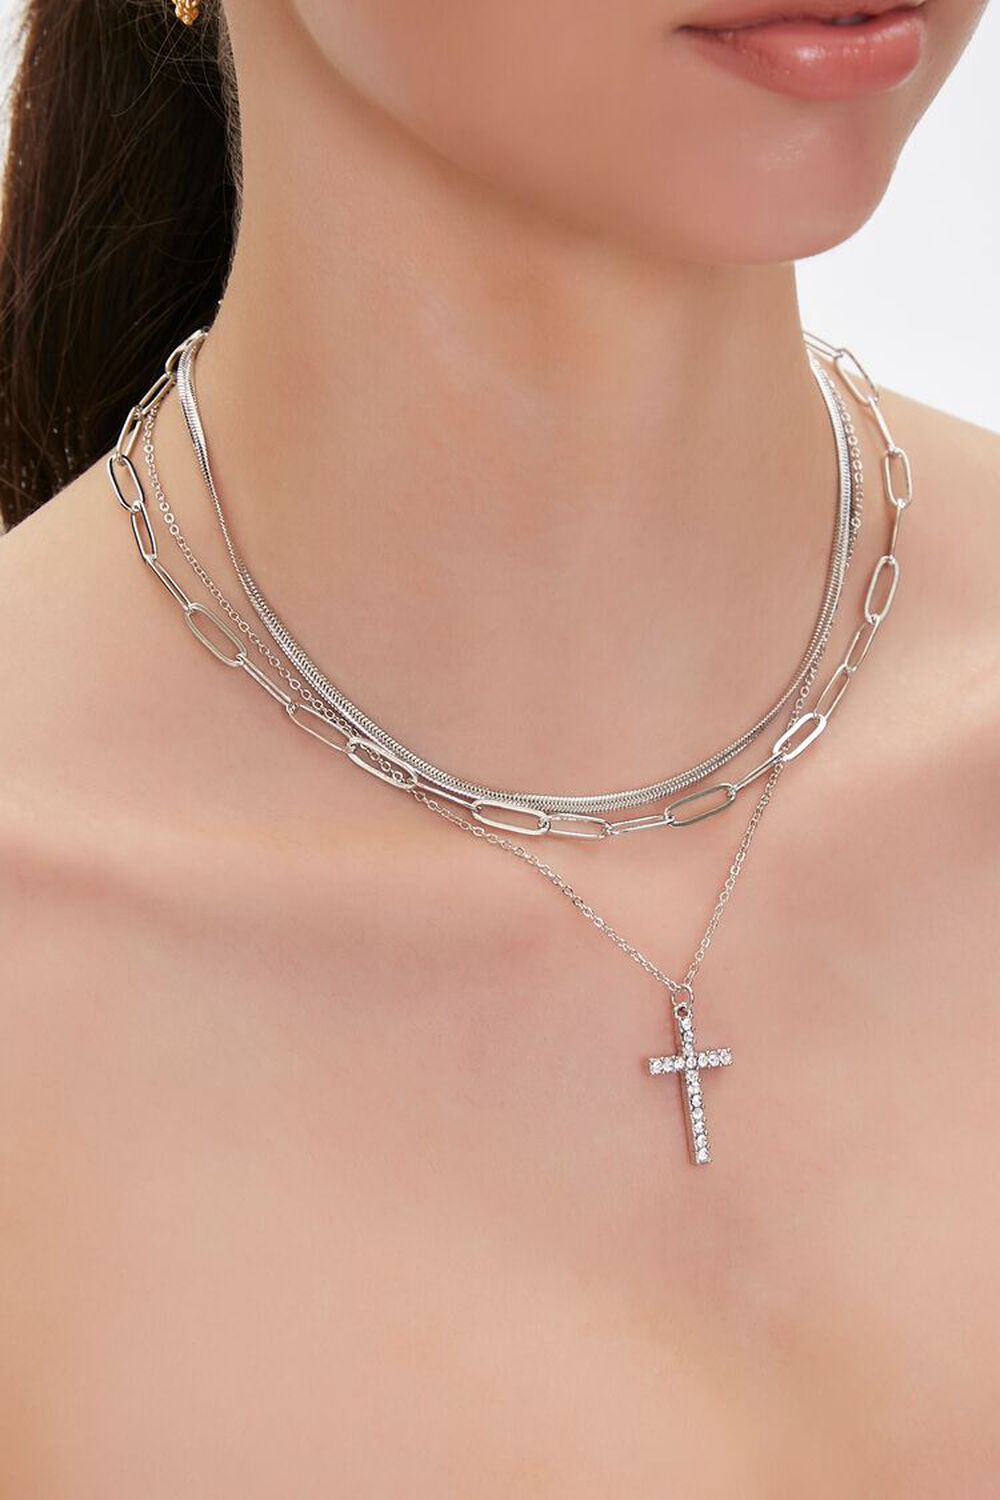 SILVER Rhinestone Cross Pendant Layered Necklace, image 1